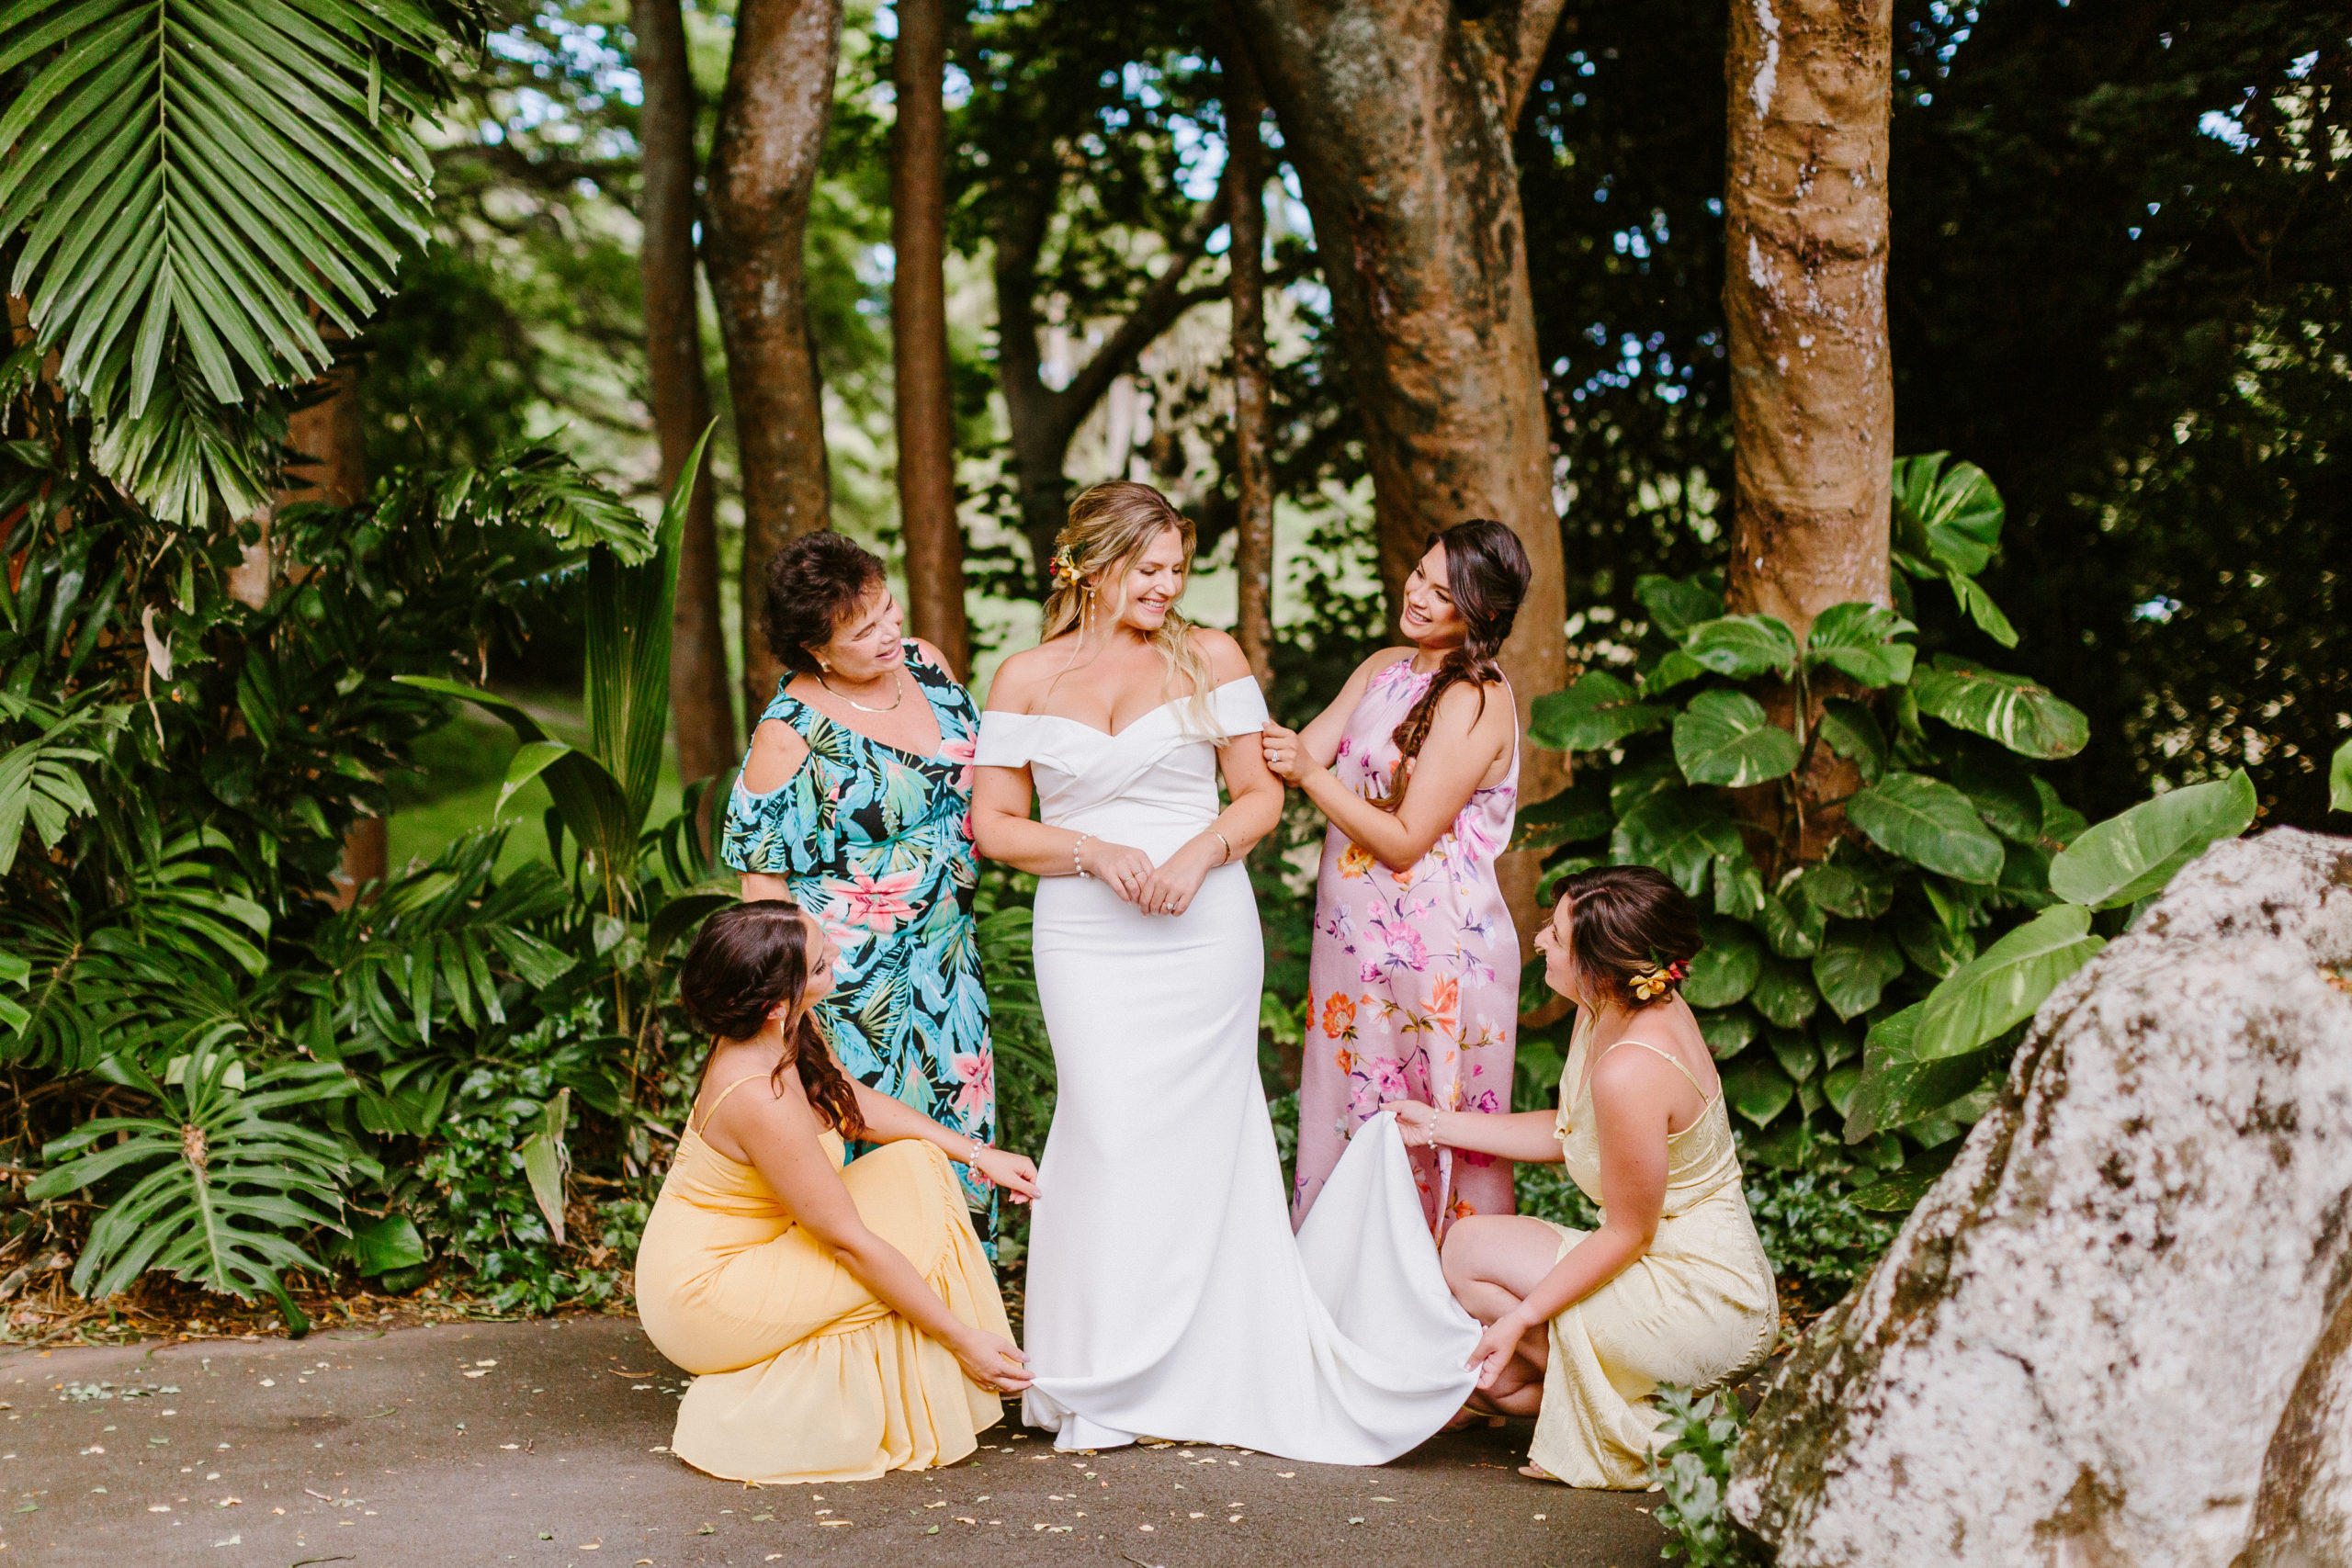 Bridesmaids helping bride get dressed in tropical venue